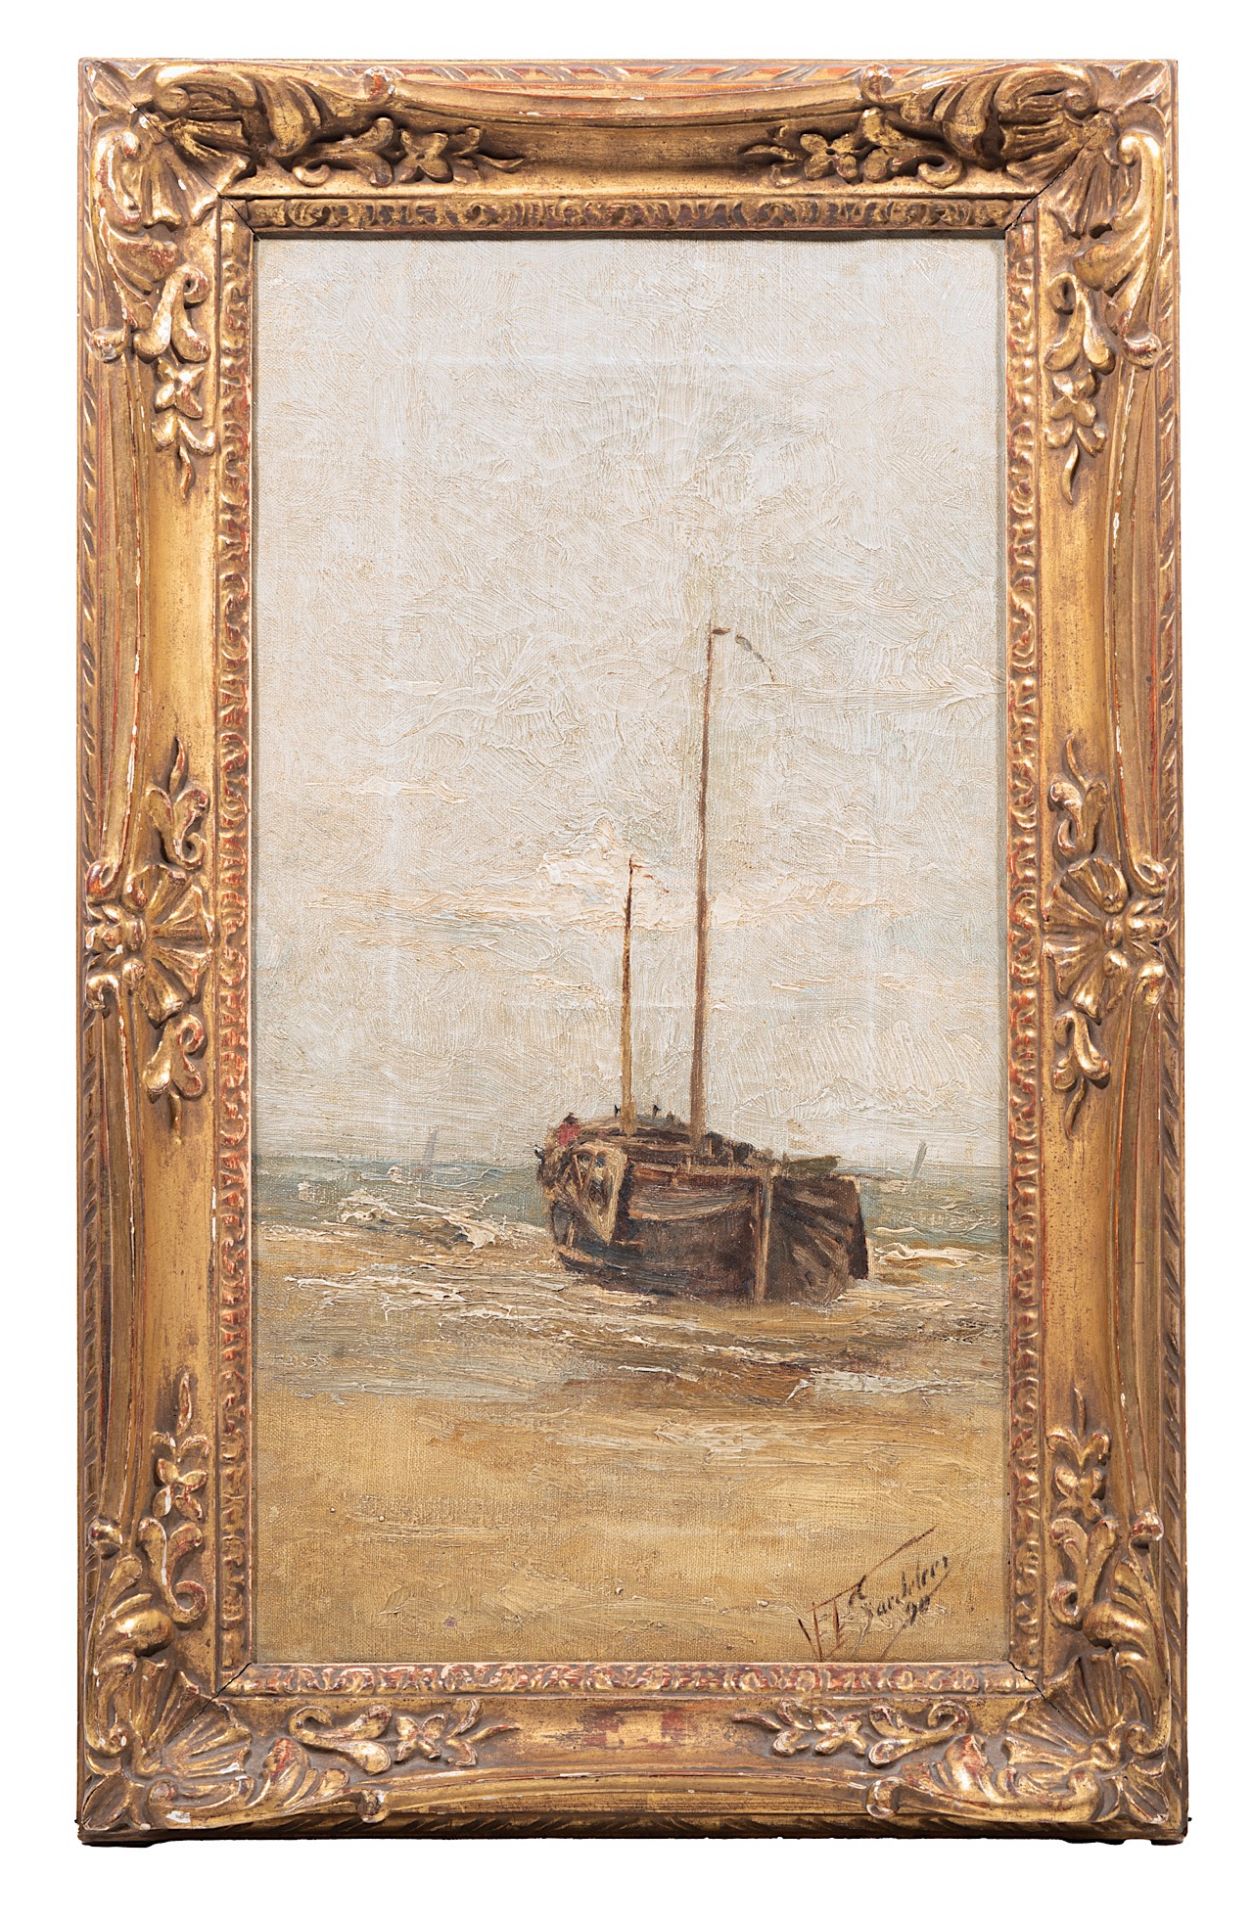 Valerius De Saedeleer (1867-1942), 'La barque a maree basse', 1890, oil on canvas 65 x 40 cm. (25.5 - Image 2 of 6